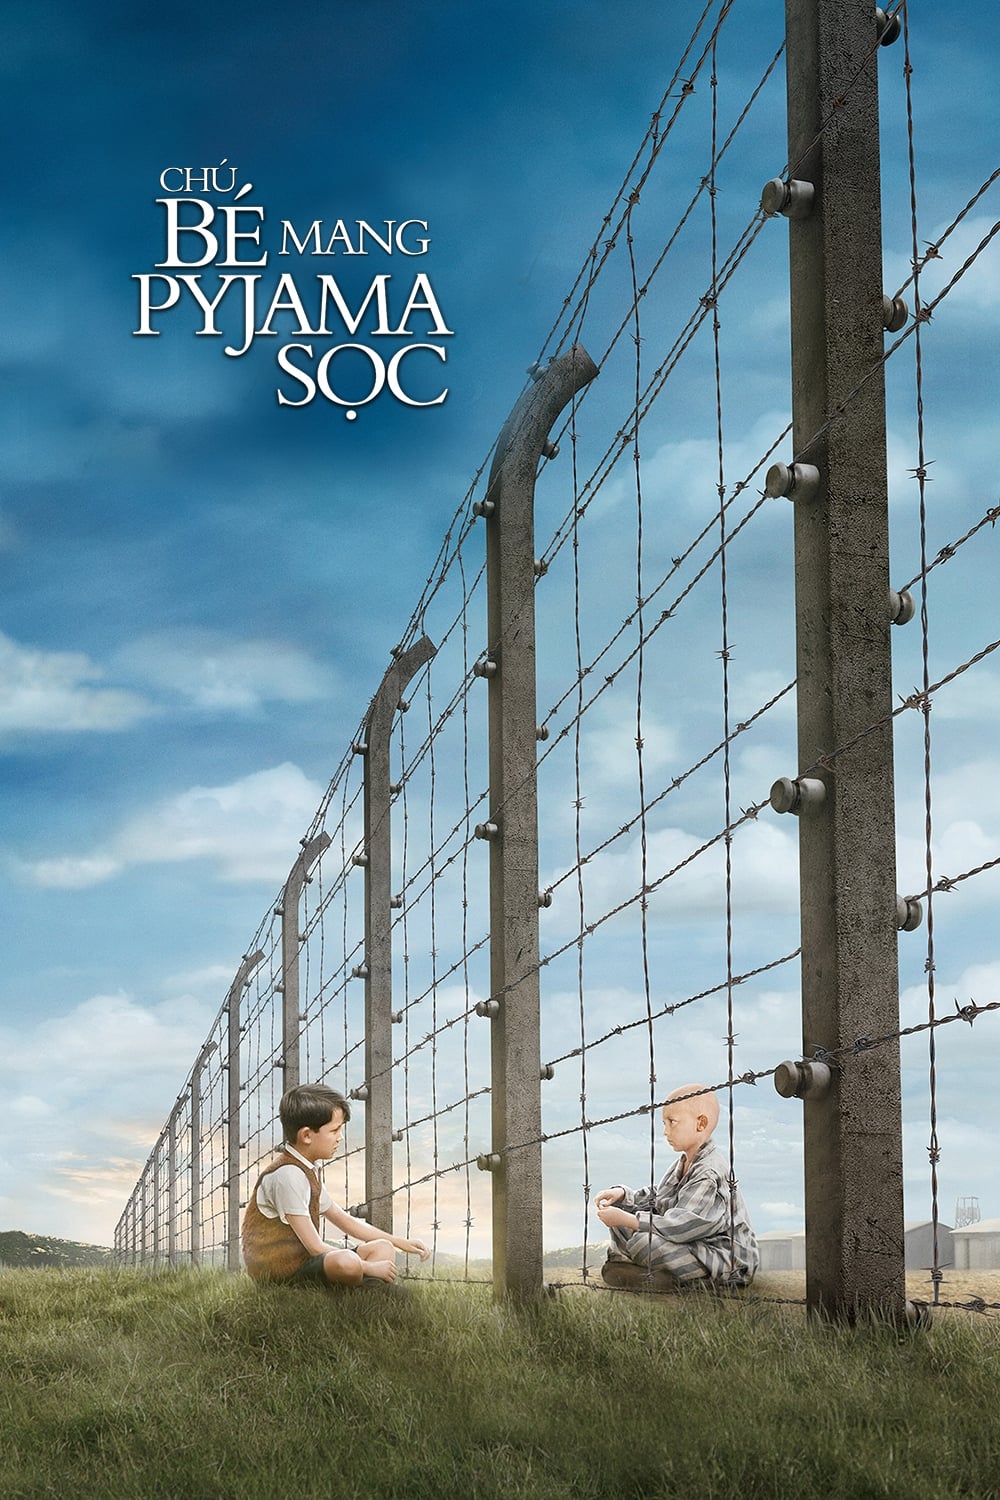 Chú Bé Mang Pyjama Sọc (The Boy in the Striped Pyjamas) [2008]